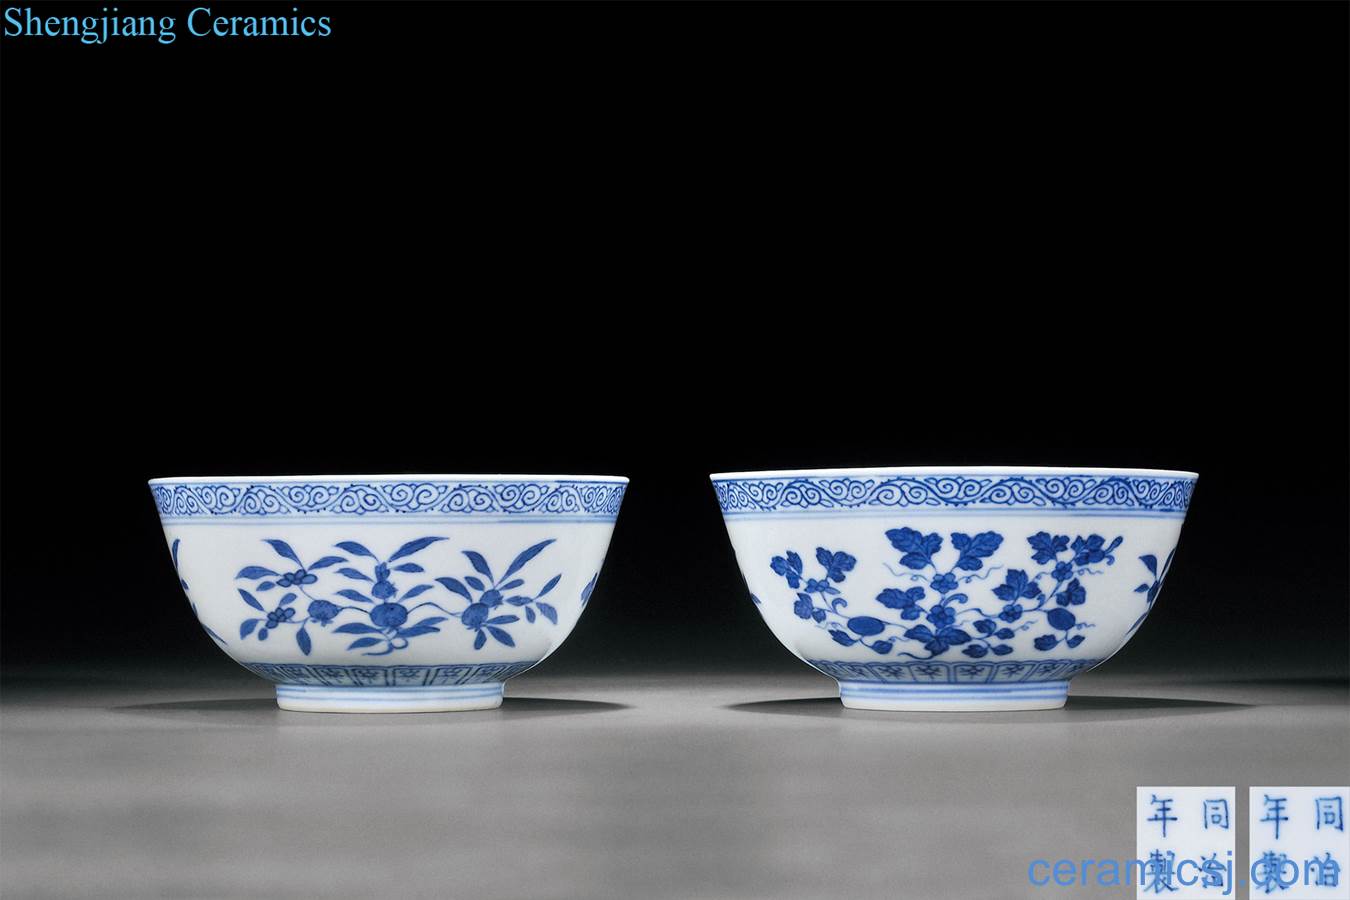 dajing Blue and white sanduo green-splashed bowls (a)